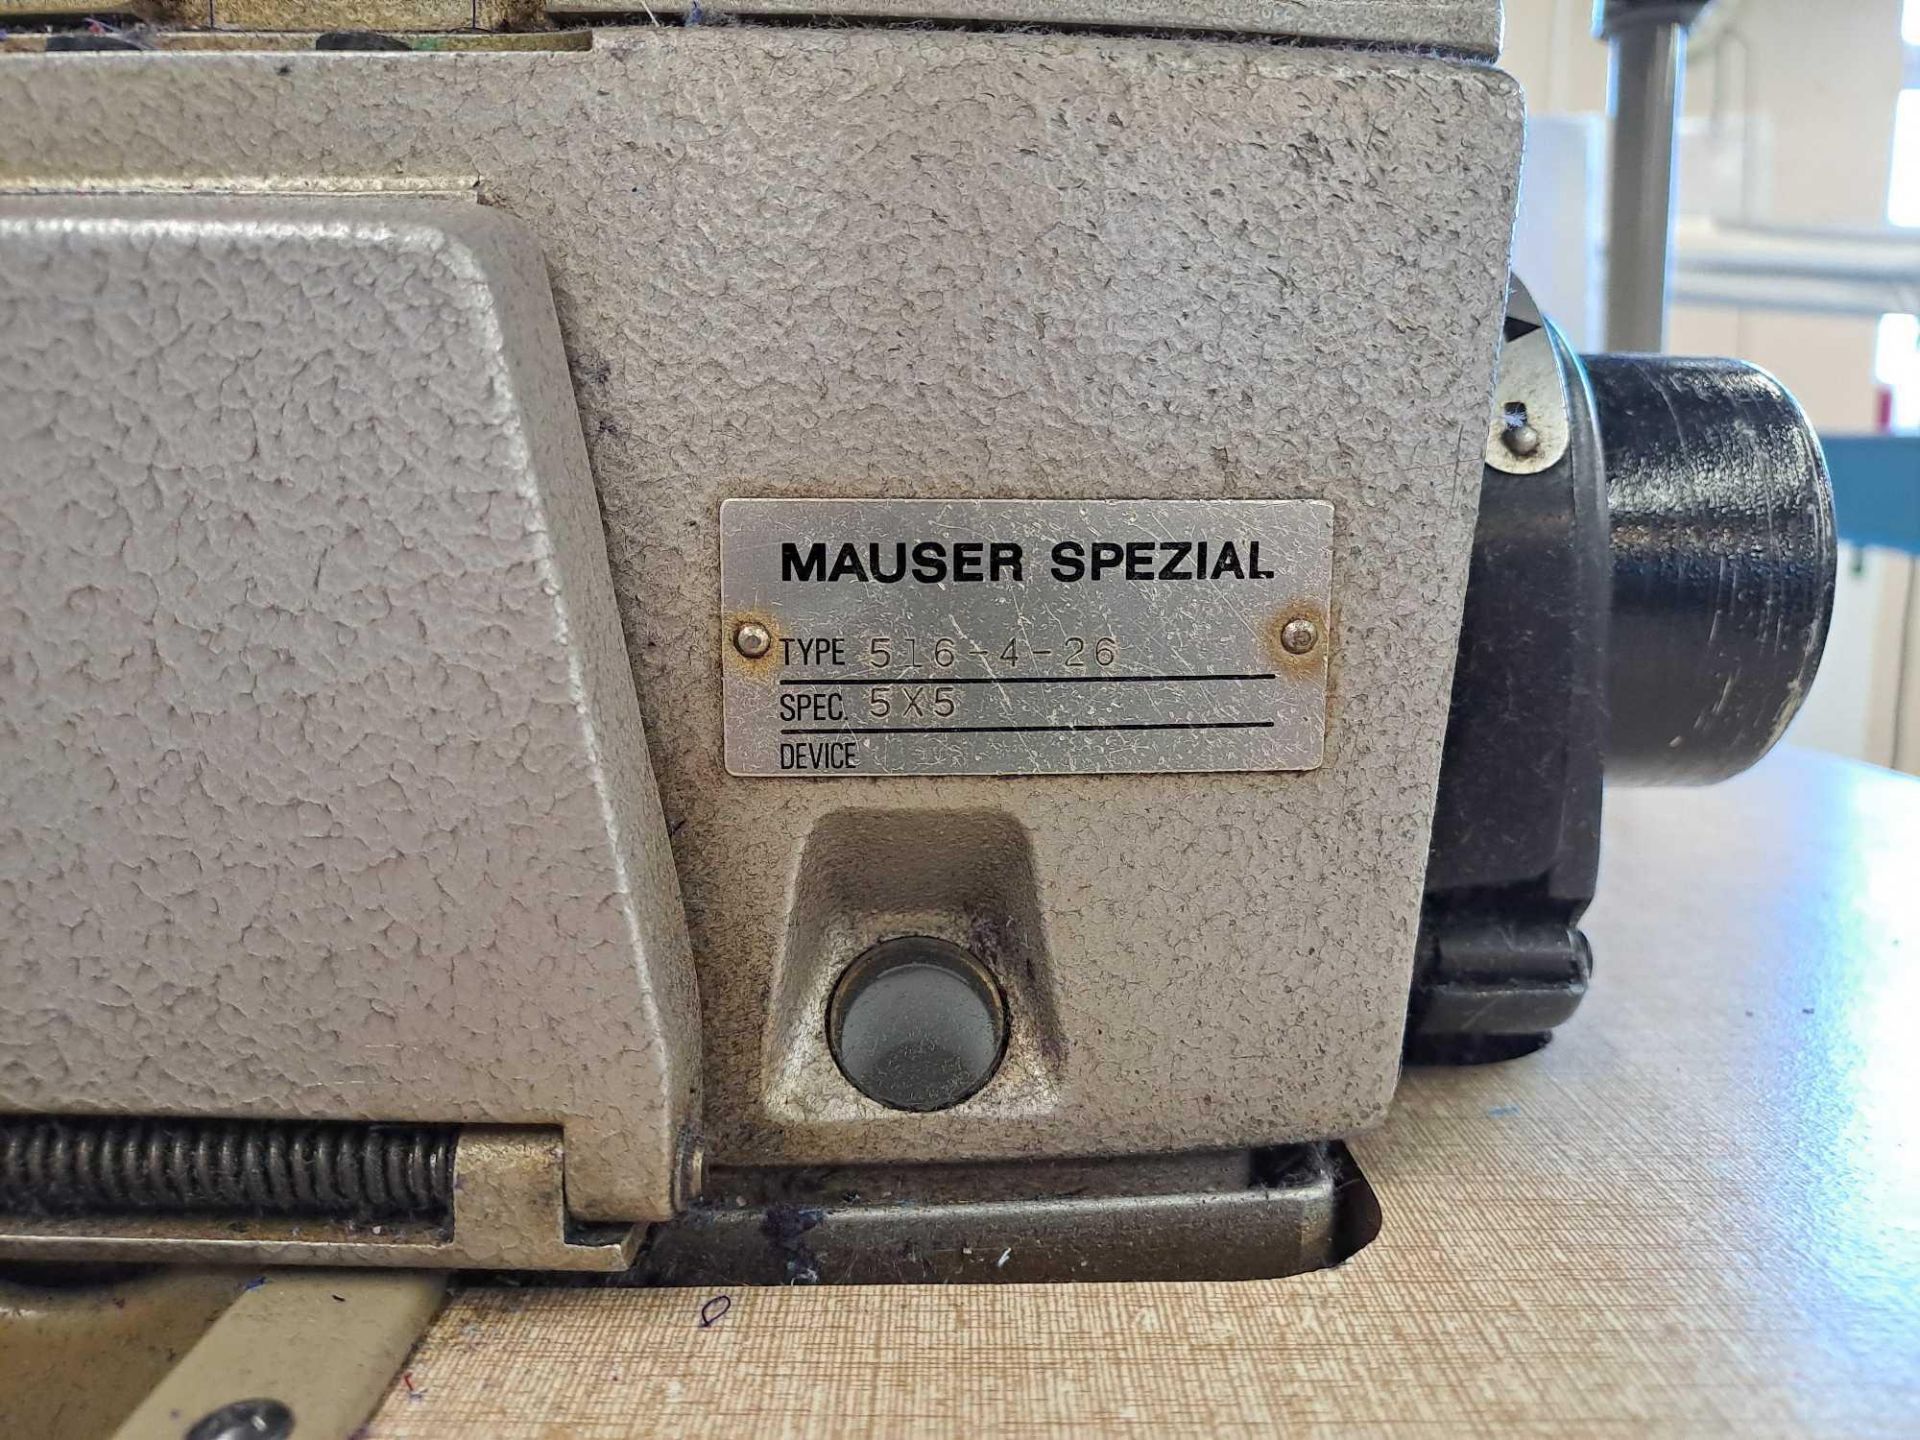 Mauser Spezial 516-4-27 Overlocker Sewing Machine - Image 3 of 5